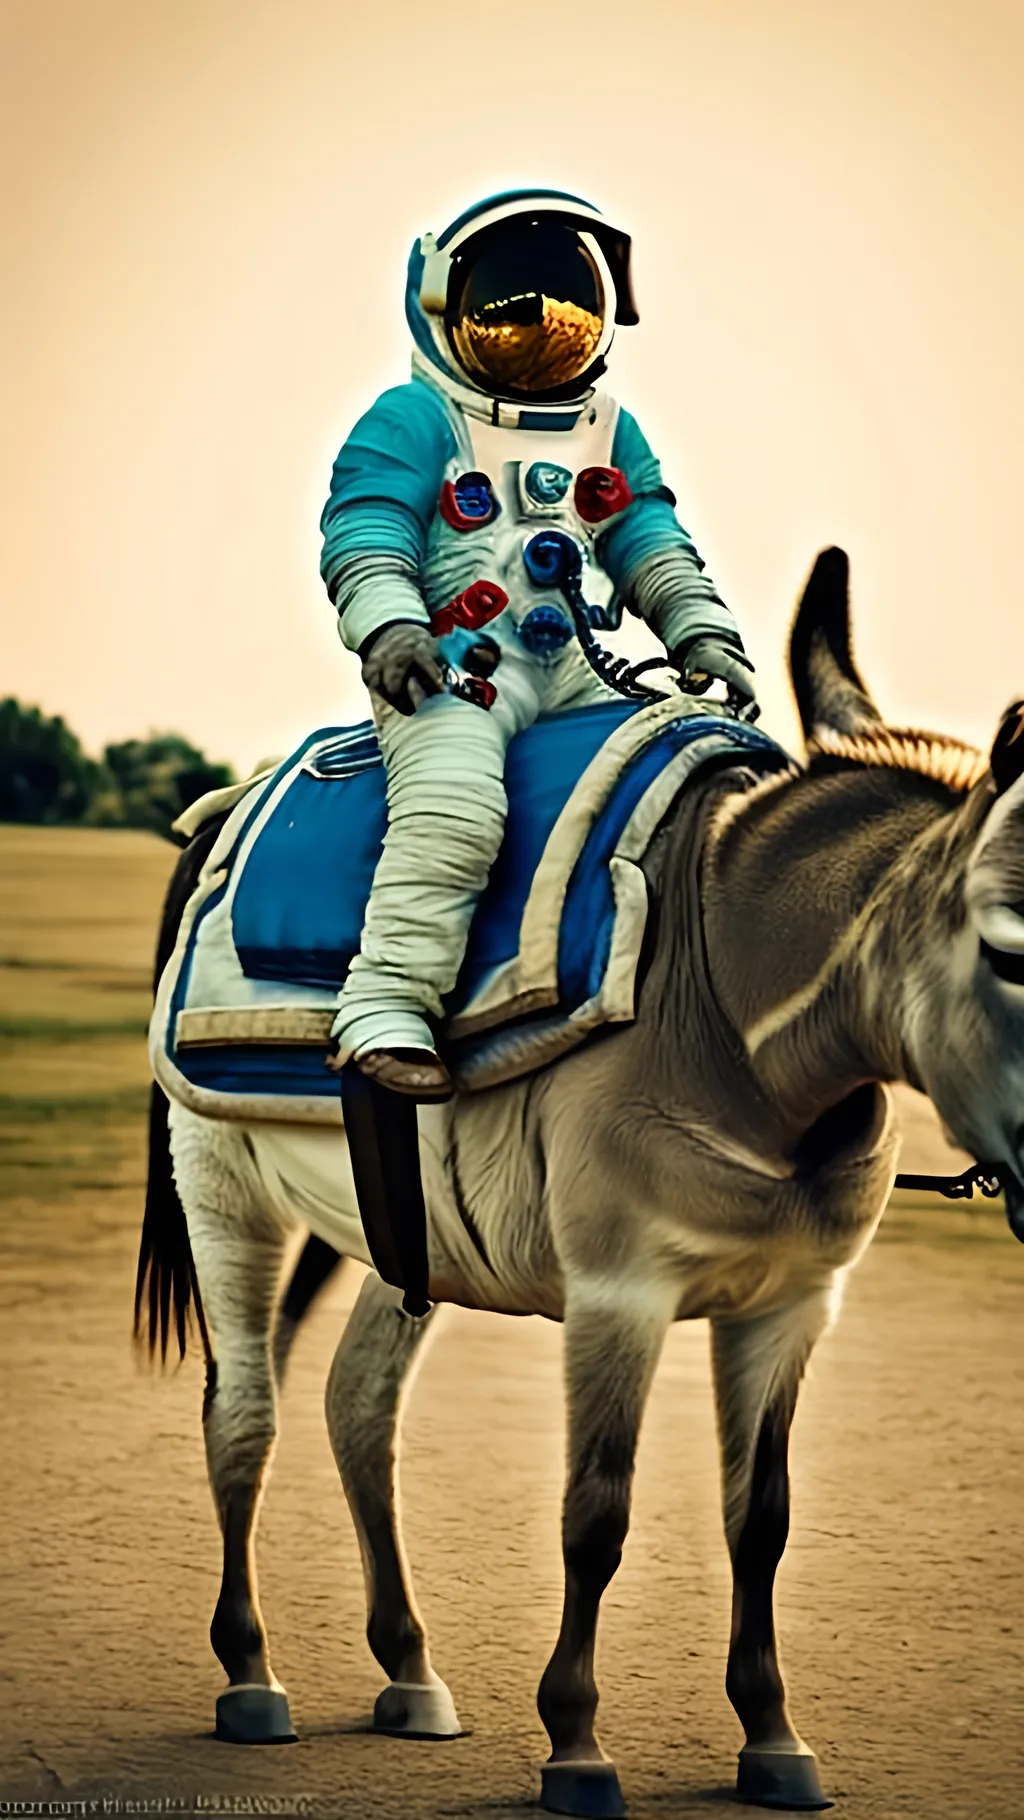 Prompt: astronaut on donkey 